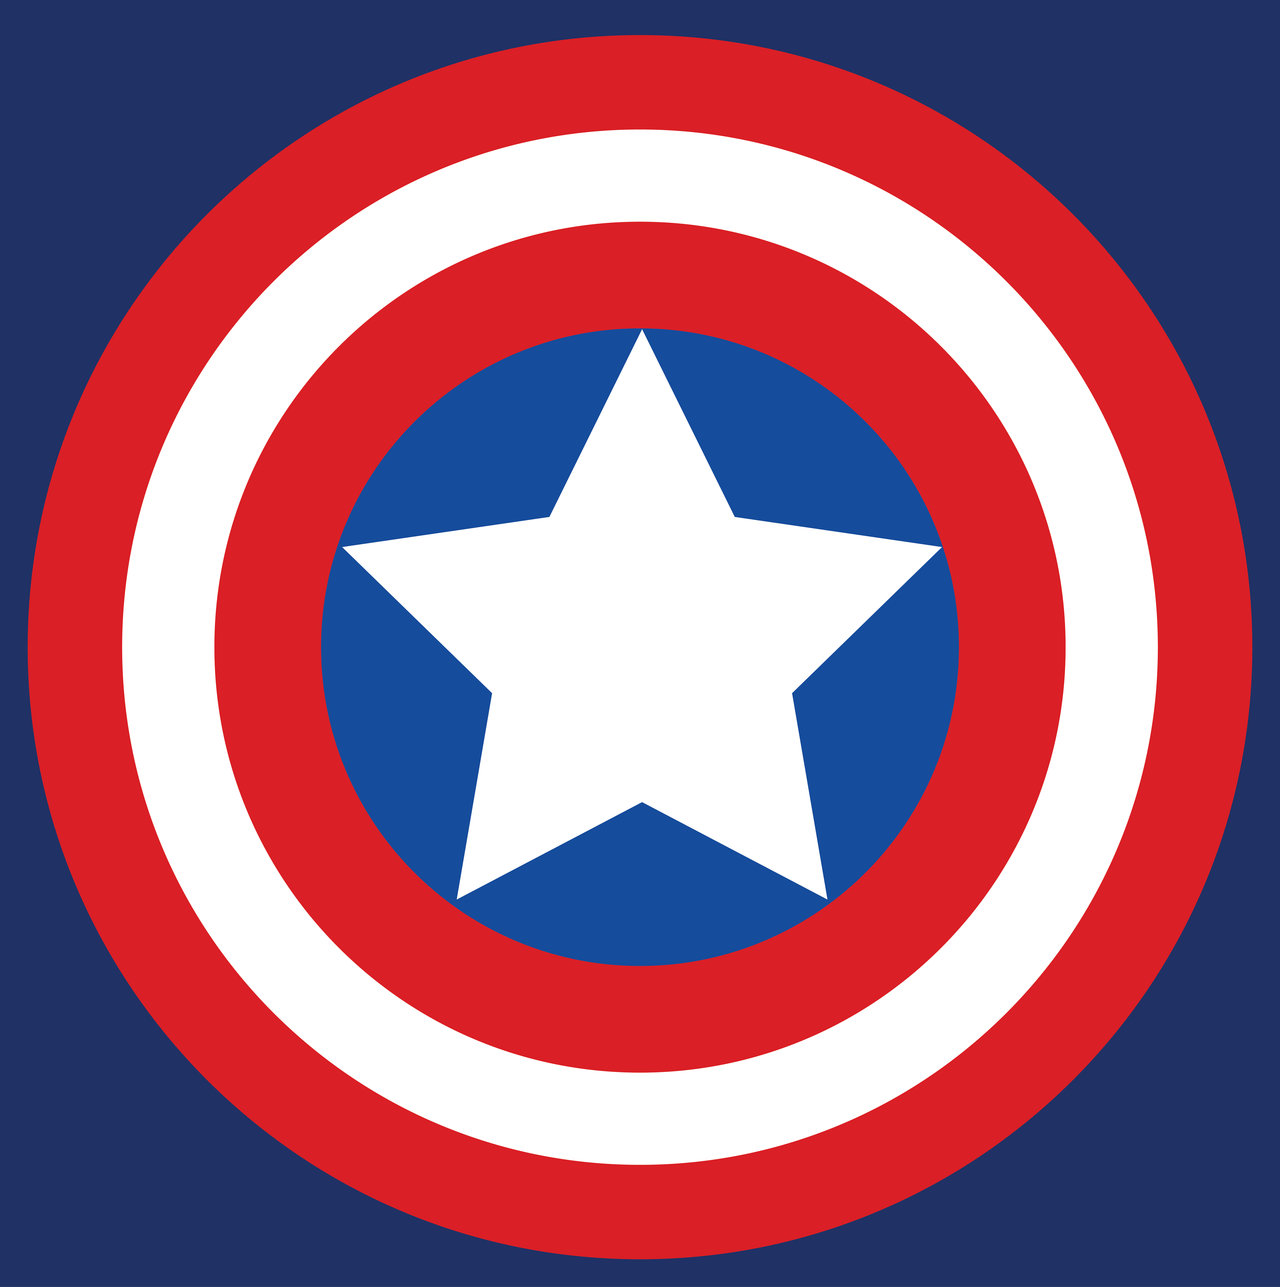 Captain Americas Shield by Kiadas on